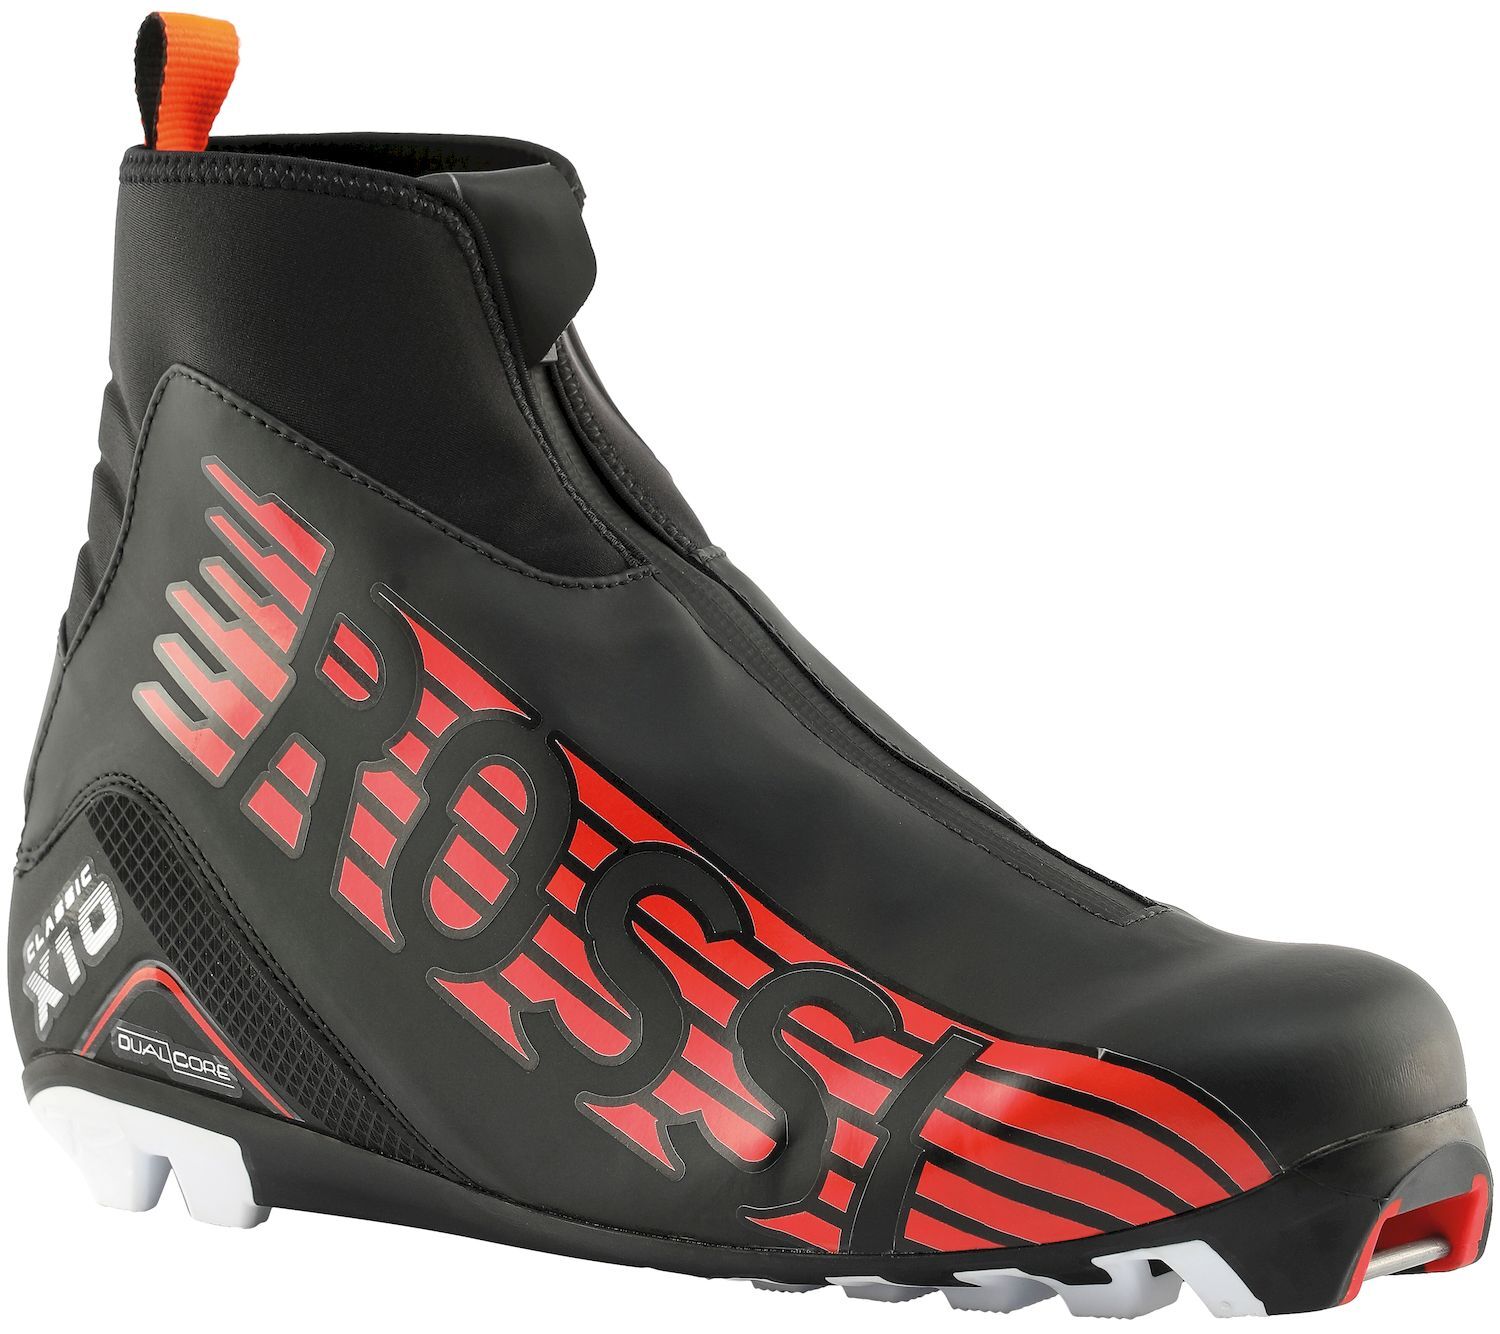 Rossignol X-10 Classic - Cross-country ski boots - Men's